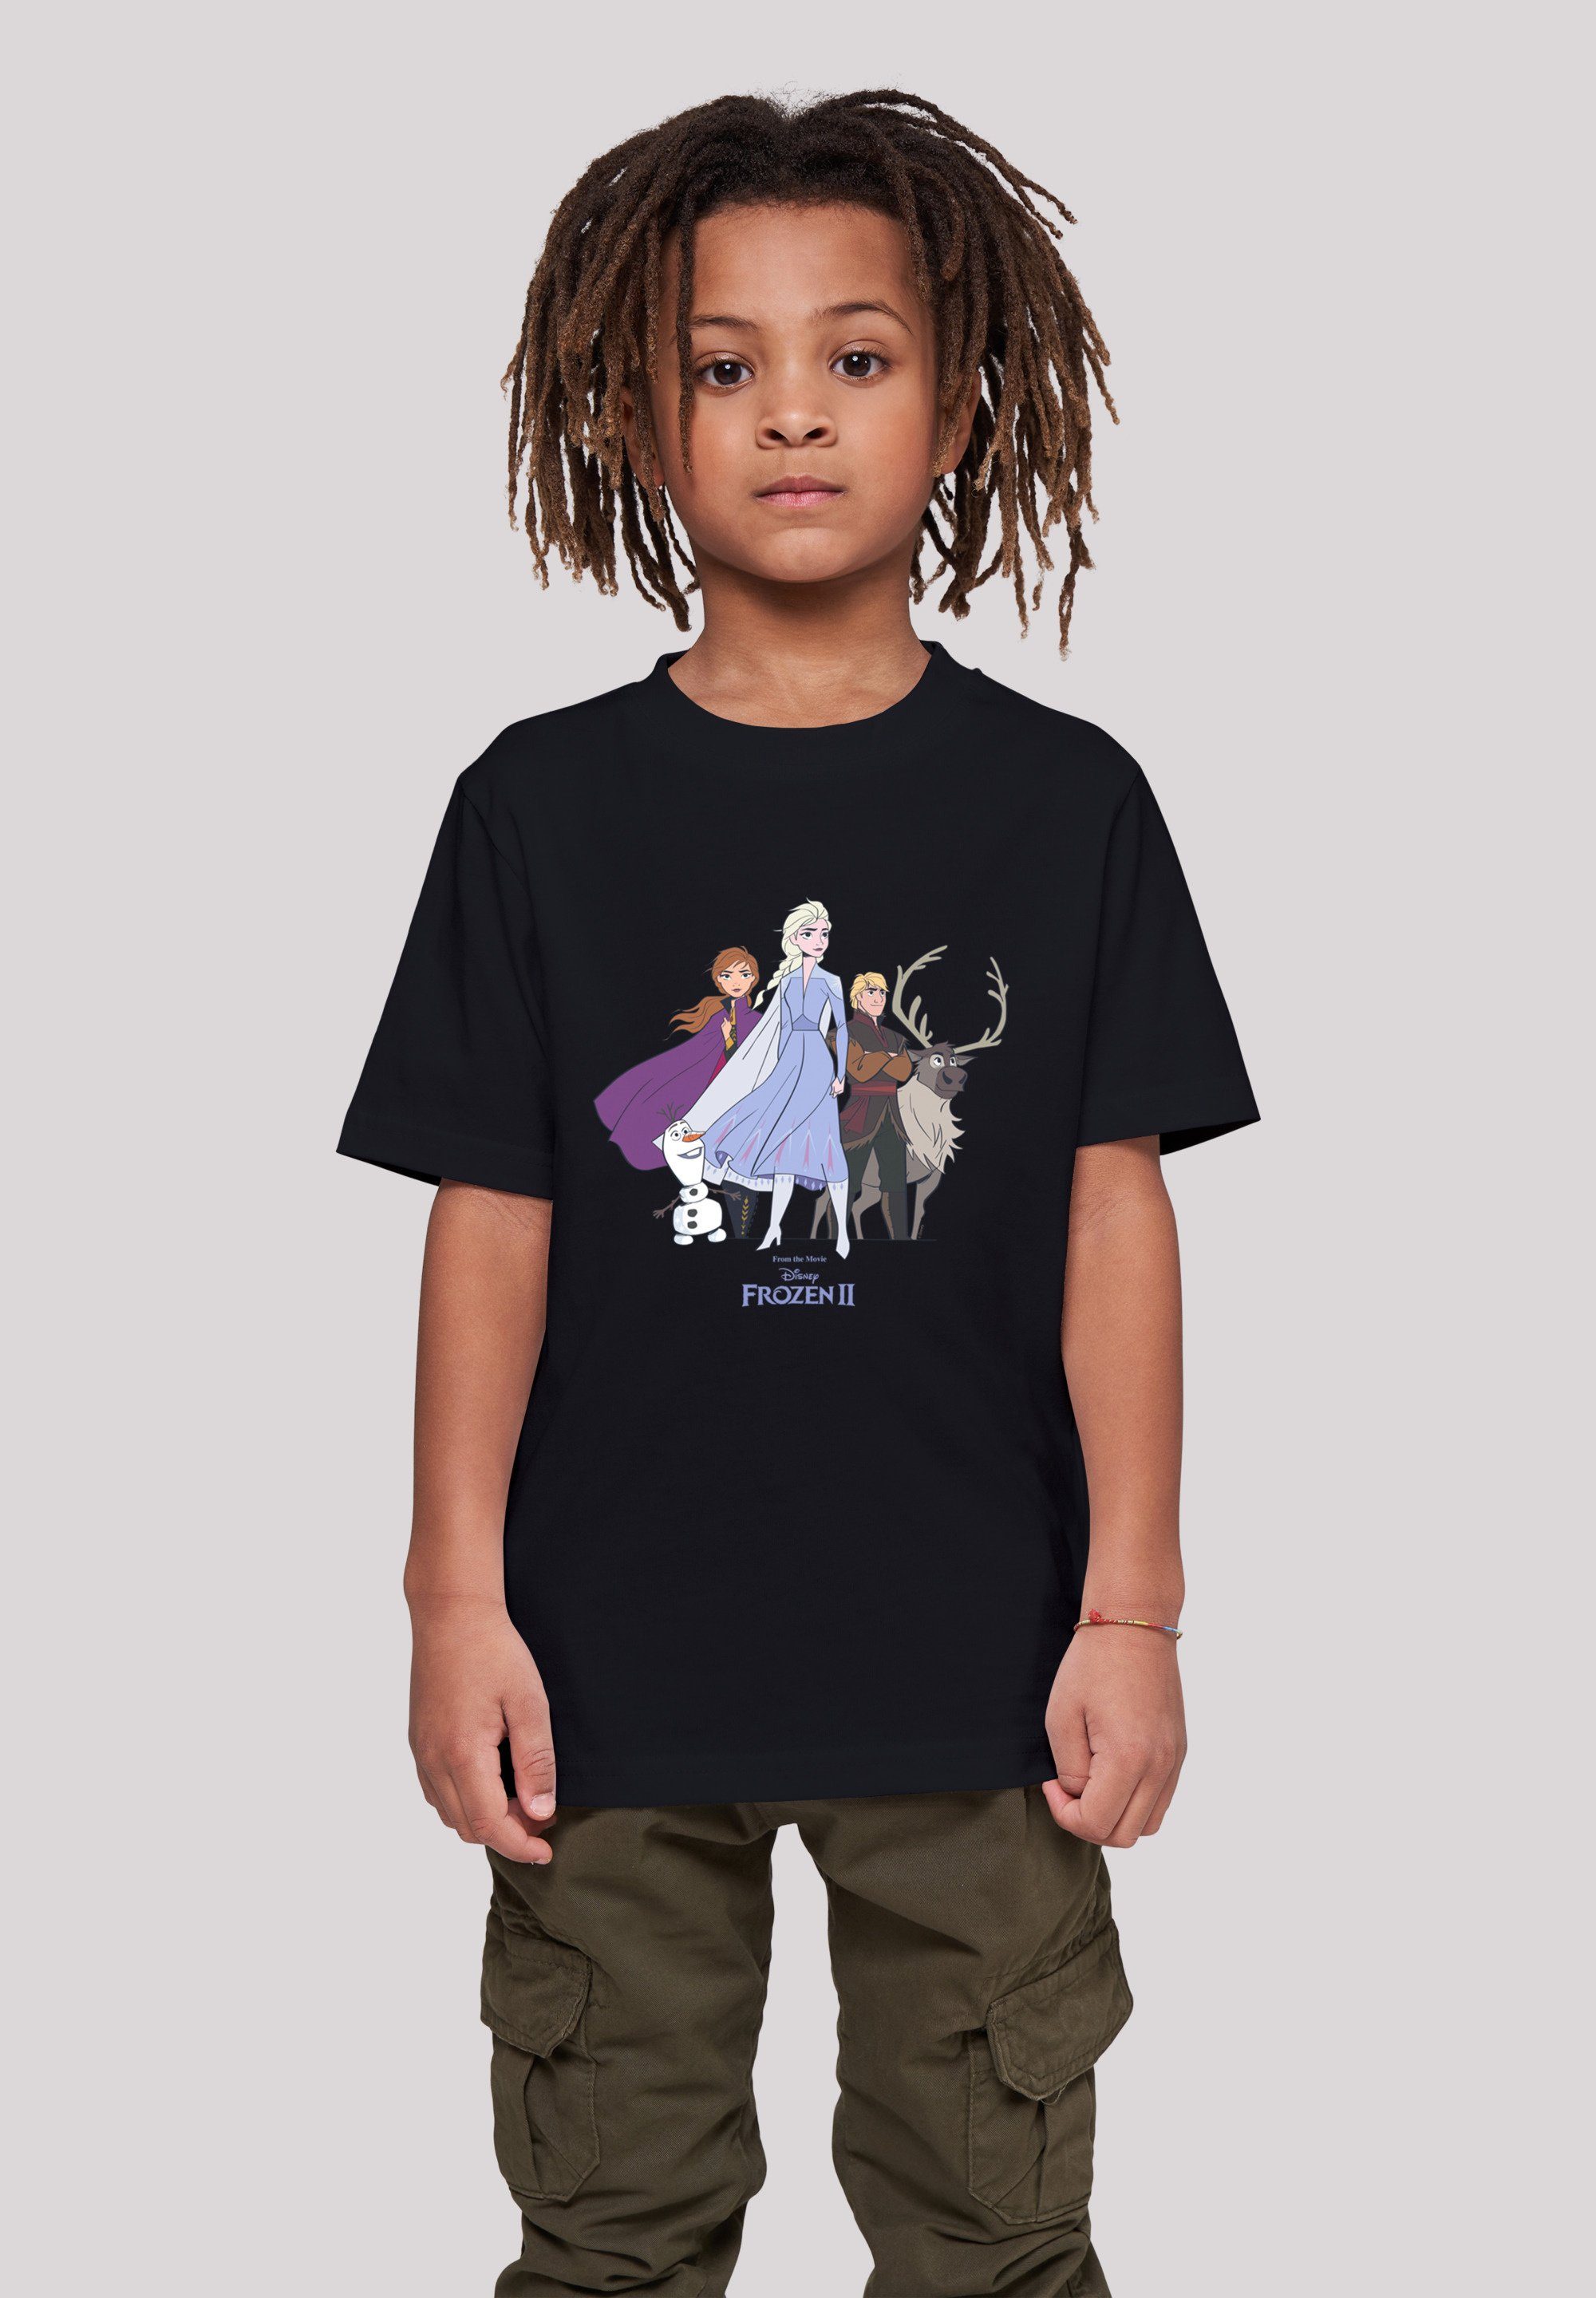 T-Shirt F4NT4STIC Frozen 2 schwarz Disney Merch,Jungen,Mädchen,Bedruckt Kinder,Premium Unisex Gruppe